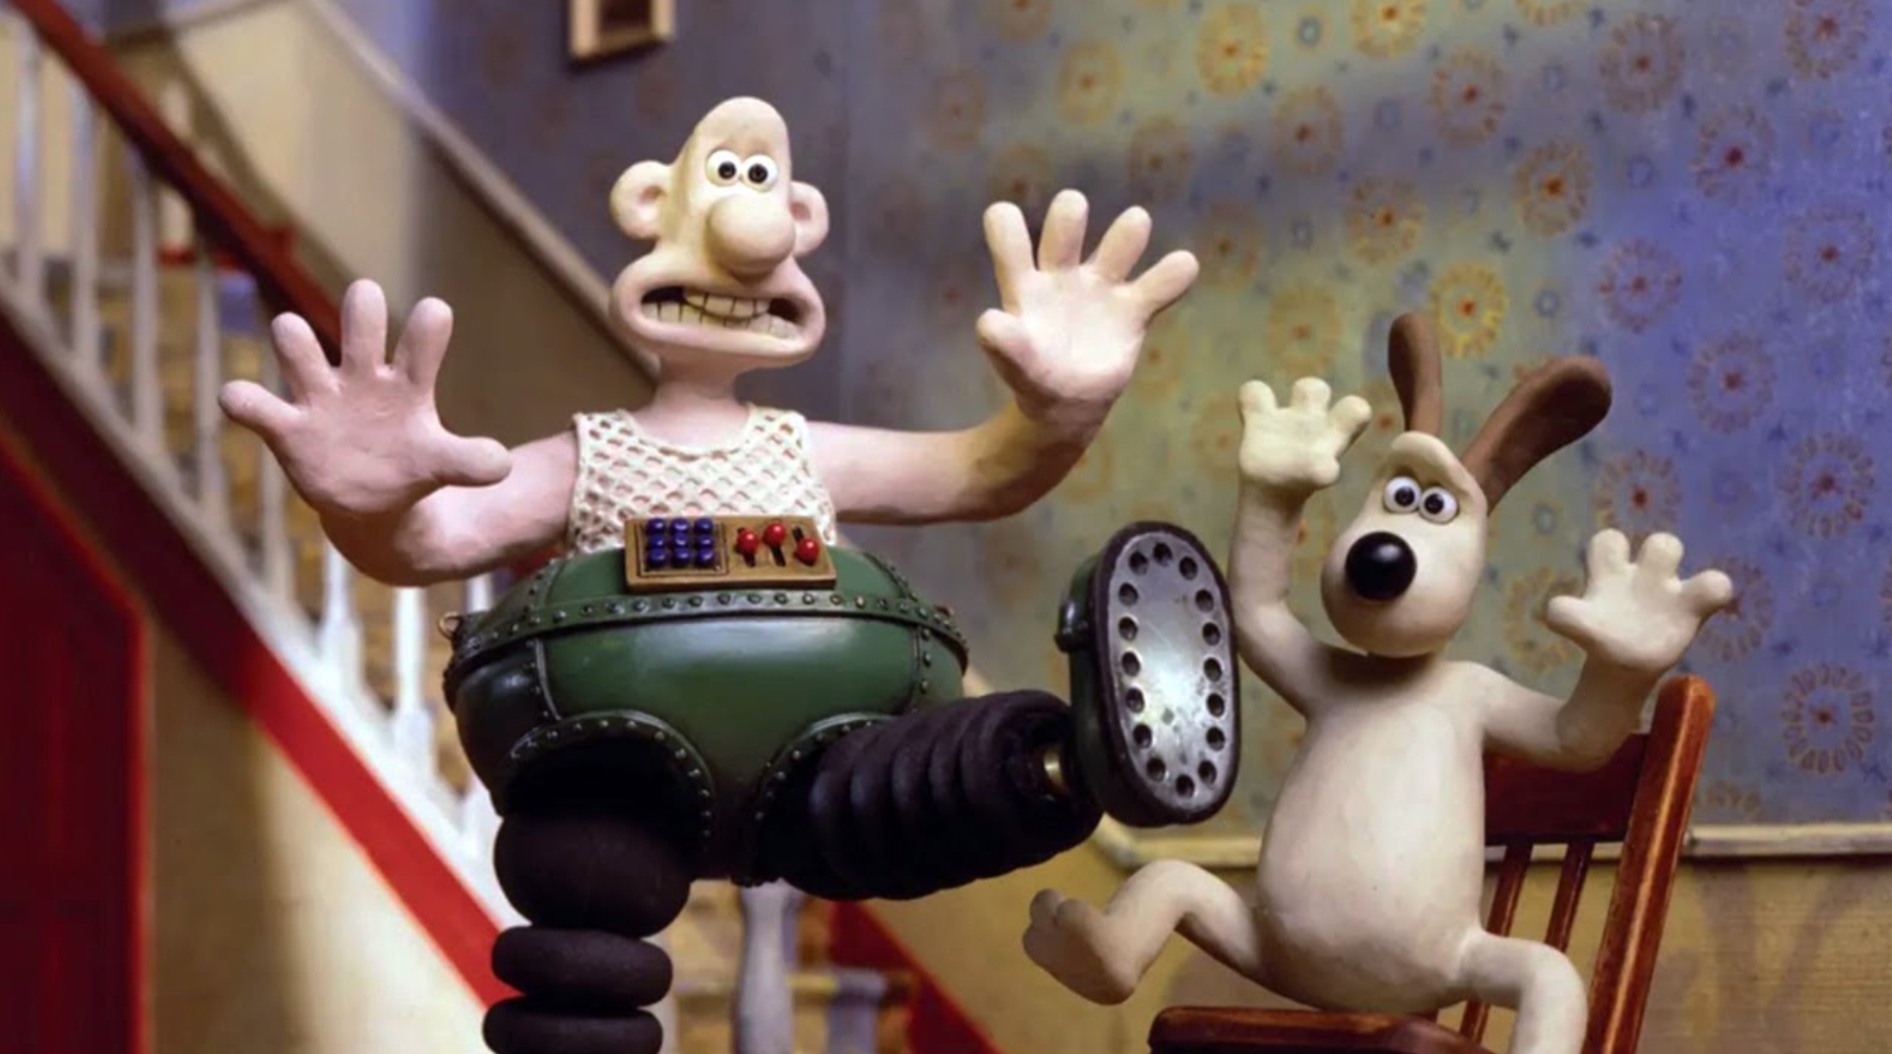 Wallace & Gromit turn 30!